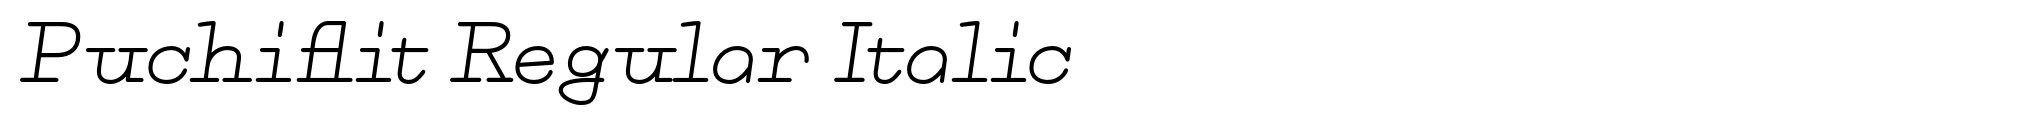 Puchiflit Regular Italic image